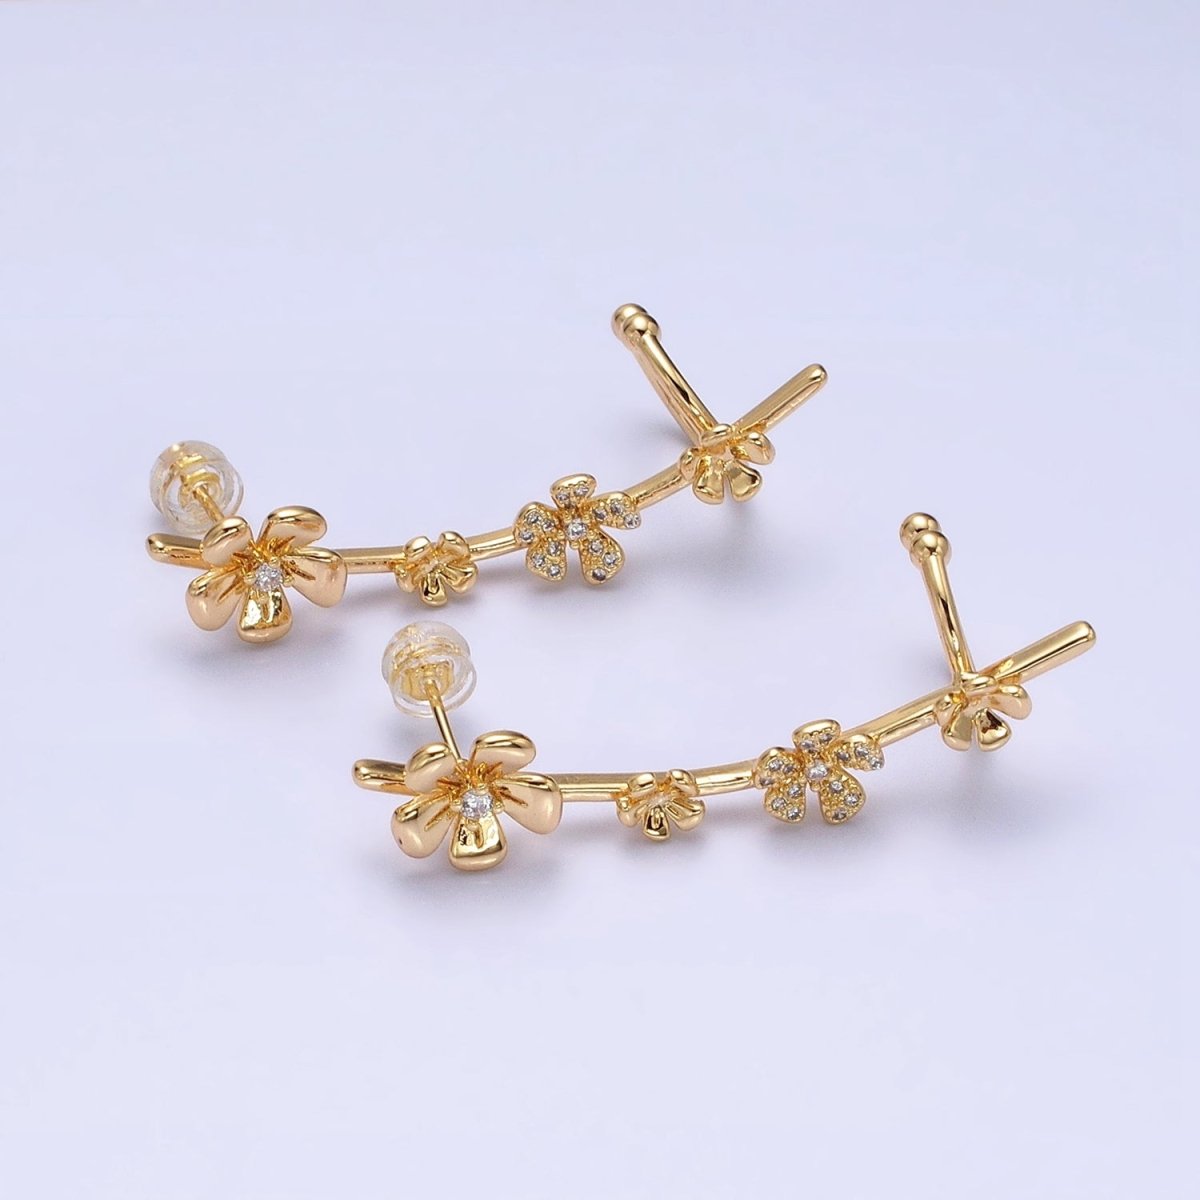 16K Gold-Filled Flower Ear Climber Earrings Stud Earring Floral Daisy | AD1478 AD1479 - DLUXCA